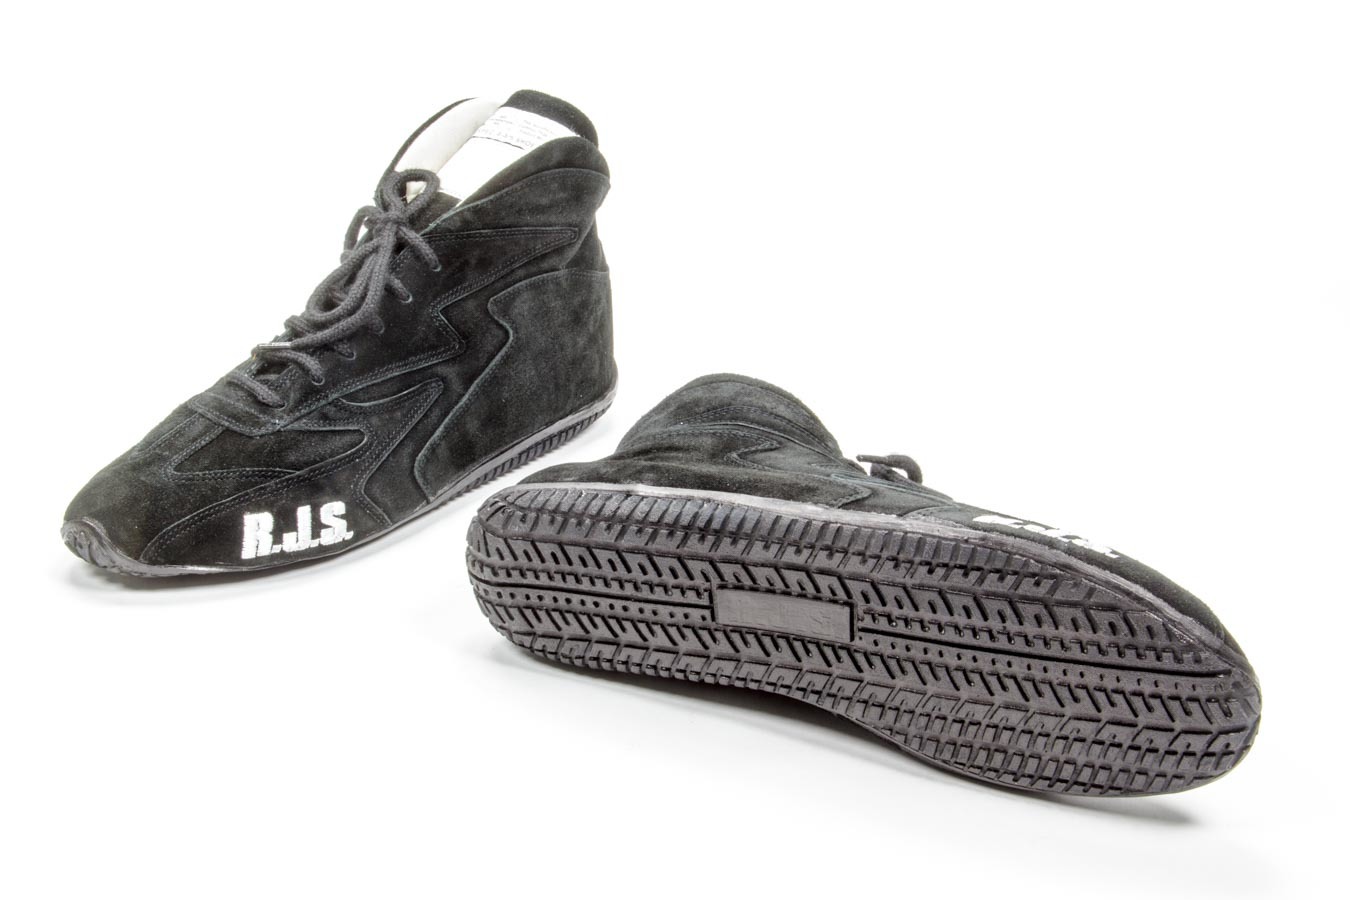 RJS, Redline Racing Shoe Mid-Top Black Size 13 SFI-5